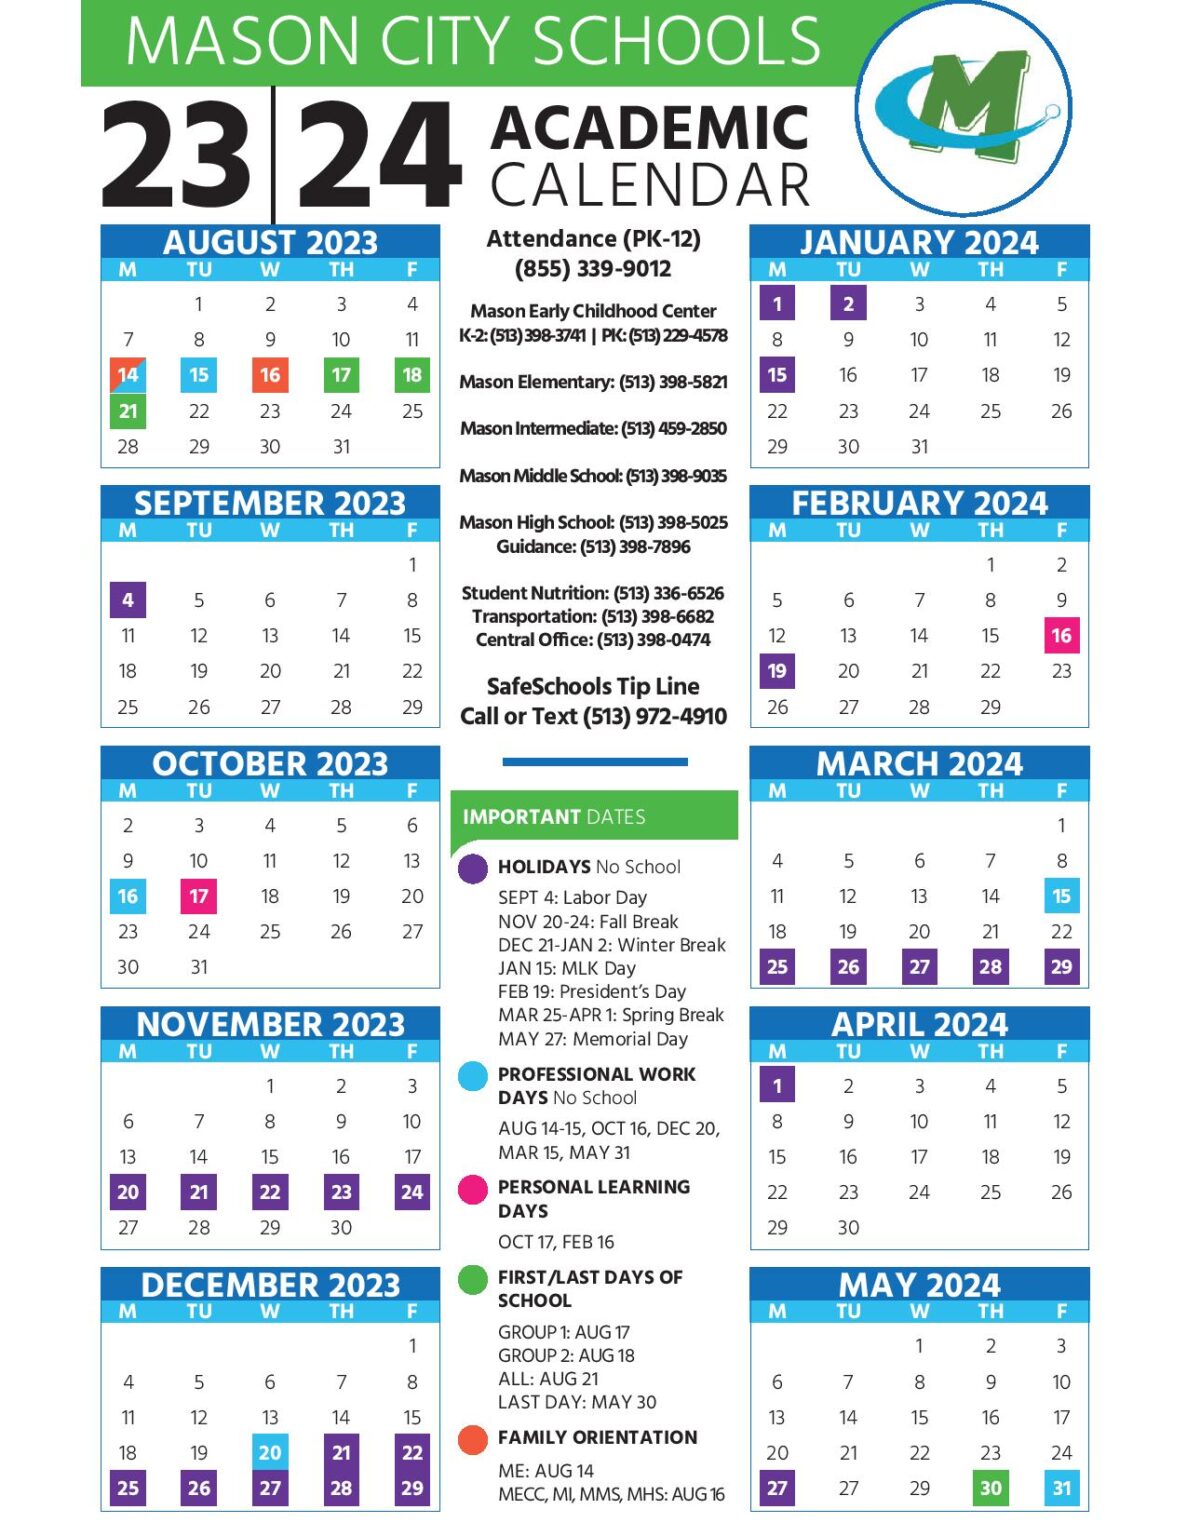 Mason City Schools Calendar 2023 2024 in PDF